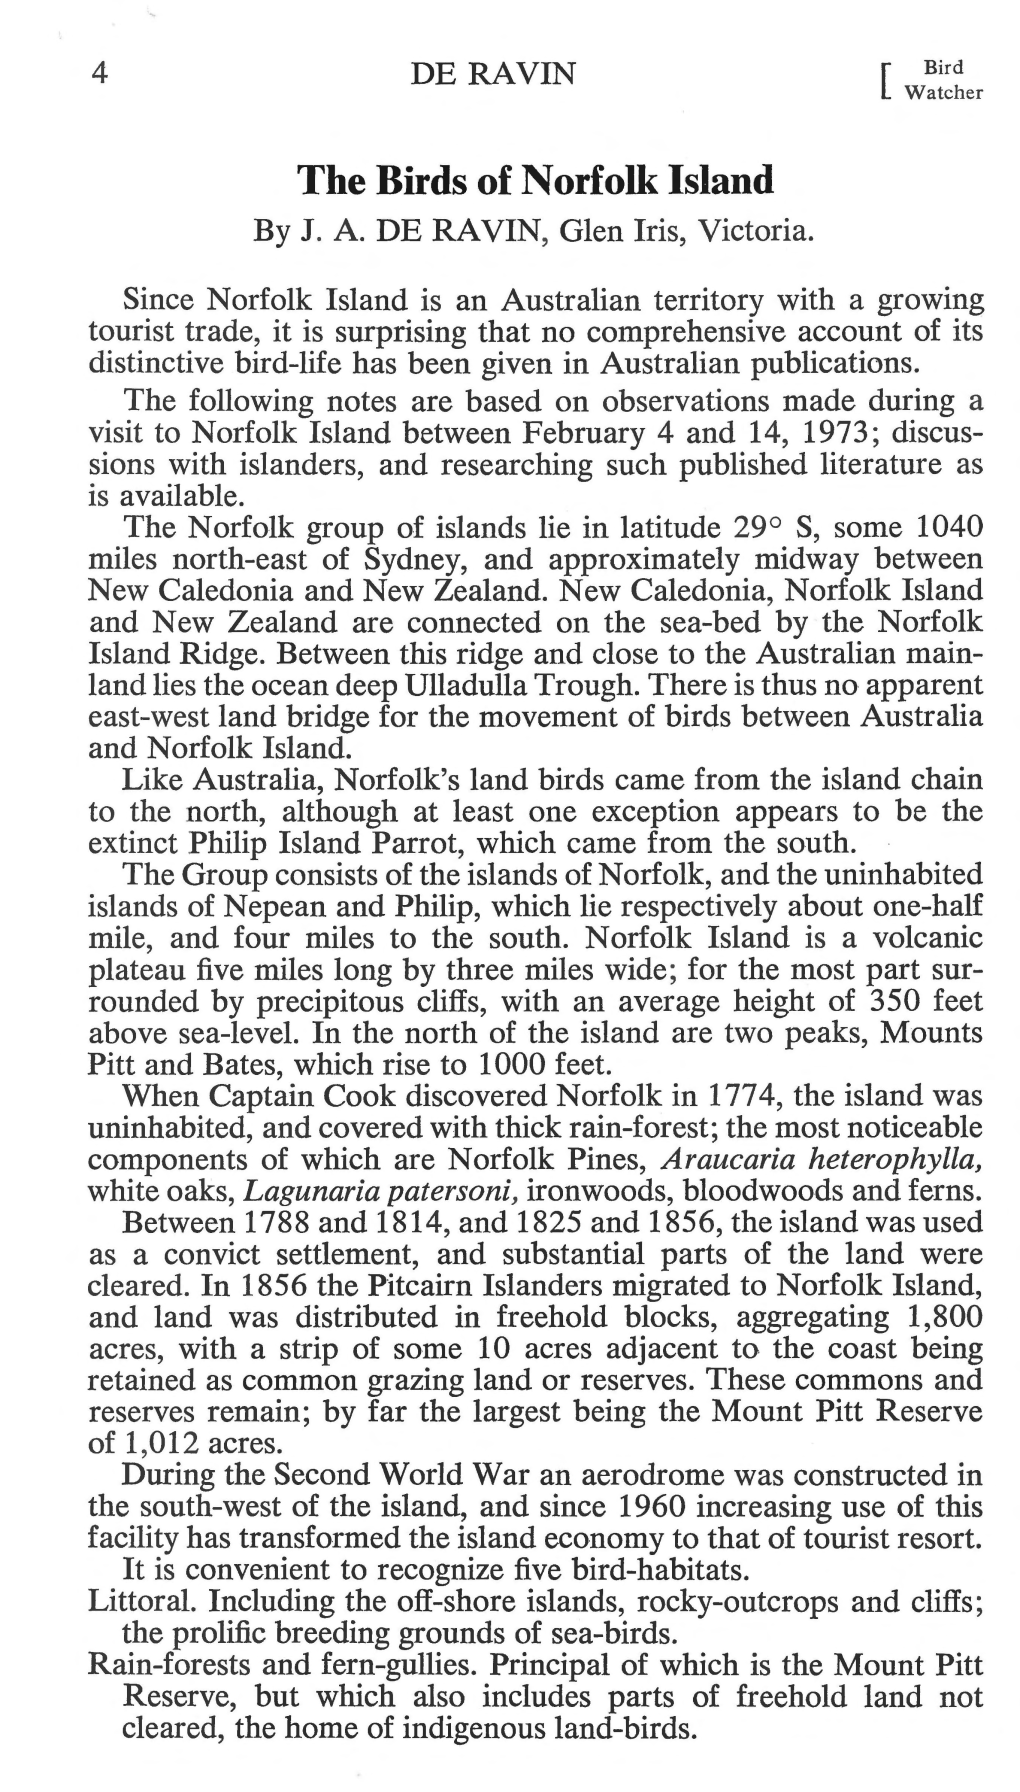 The Birds of Norfolk Island by J